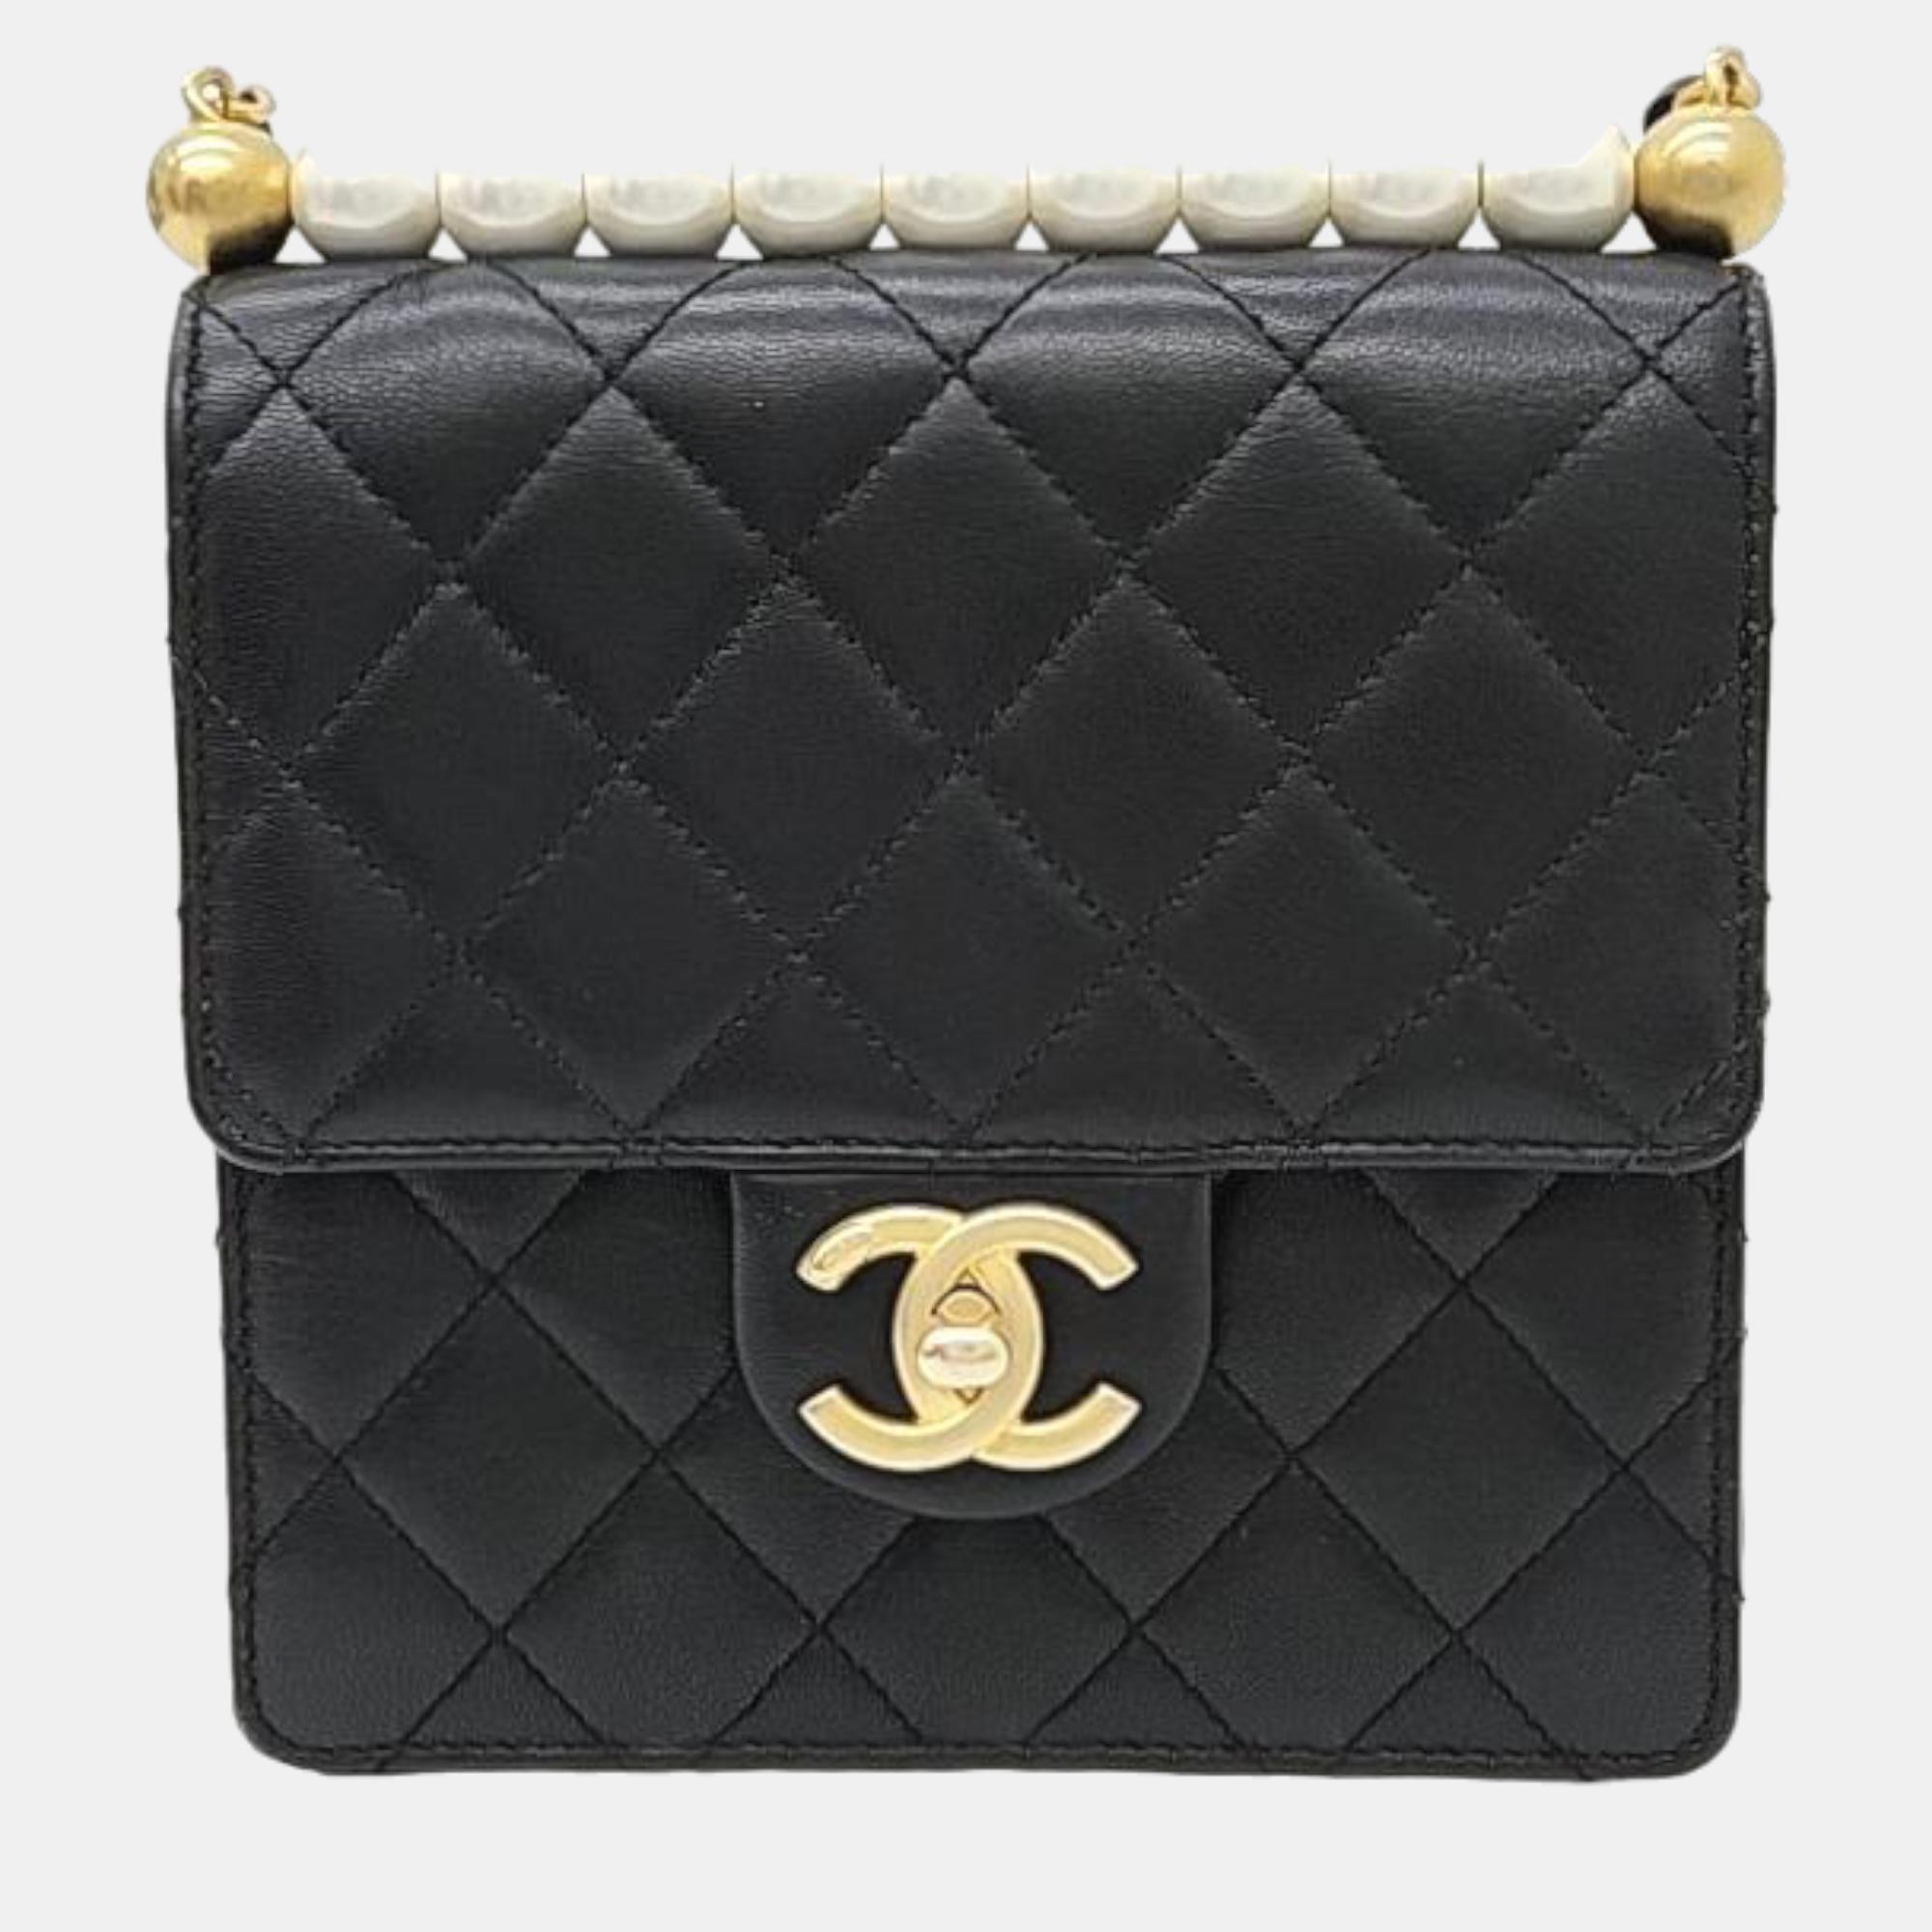 Chanel black lambskin leather chic pearl flap shoulder bag